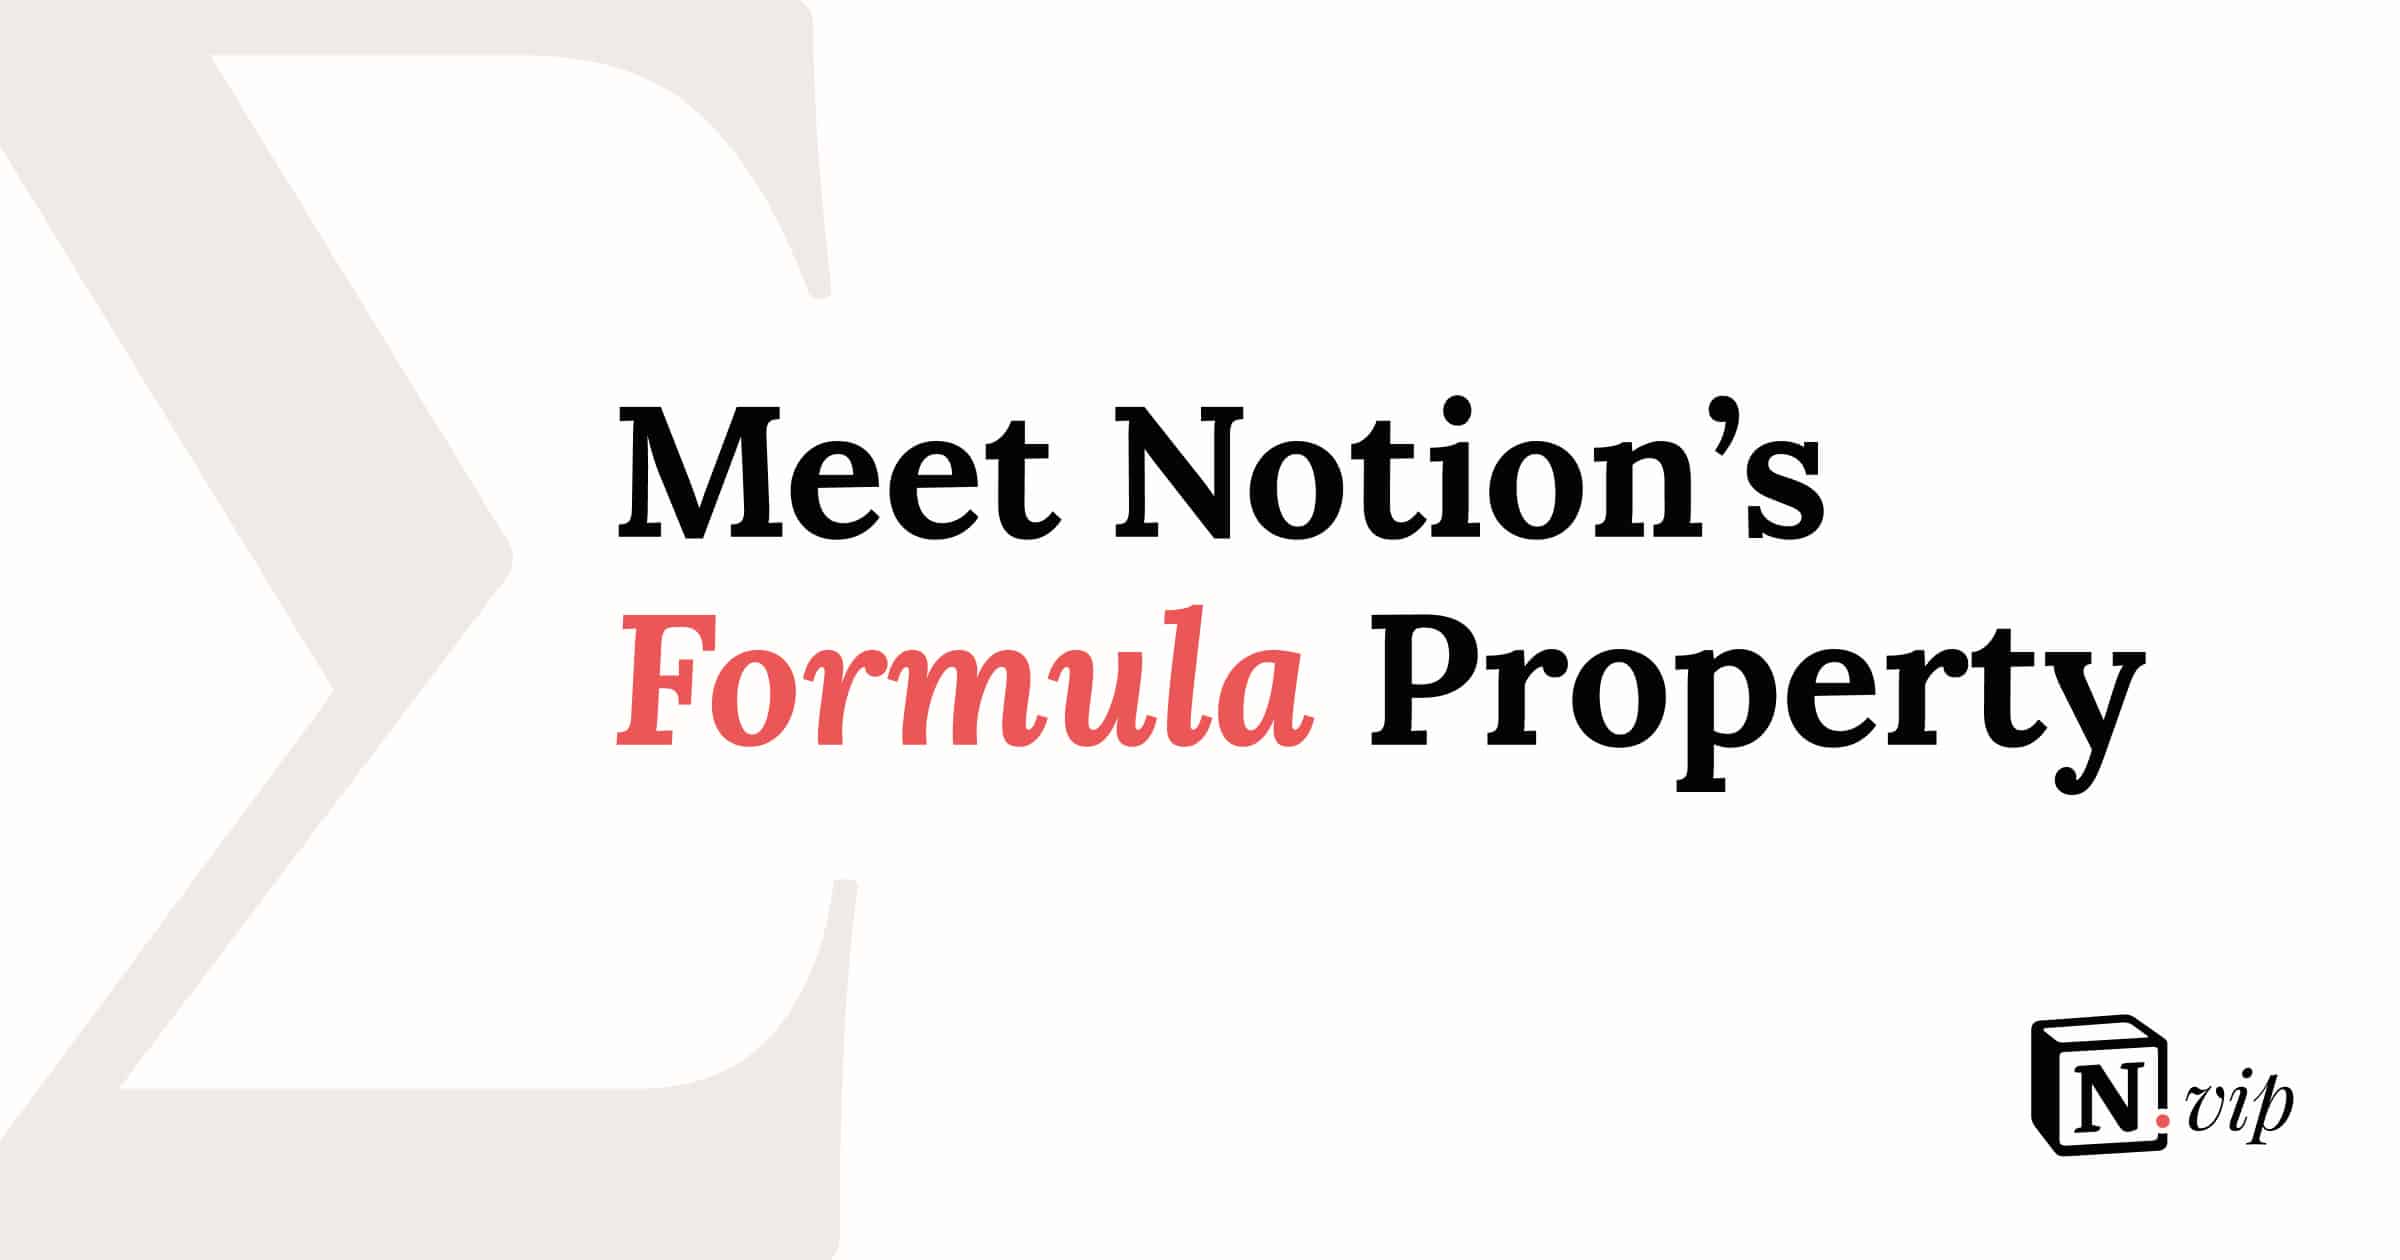 Meet Notion's Formula Property